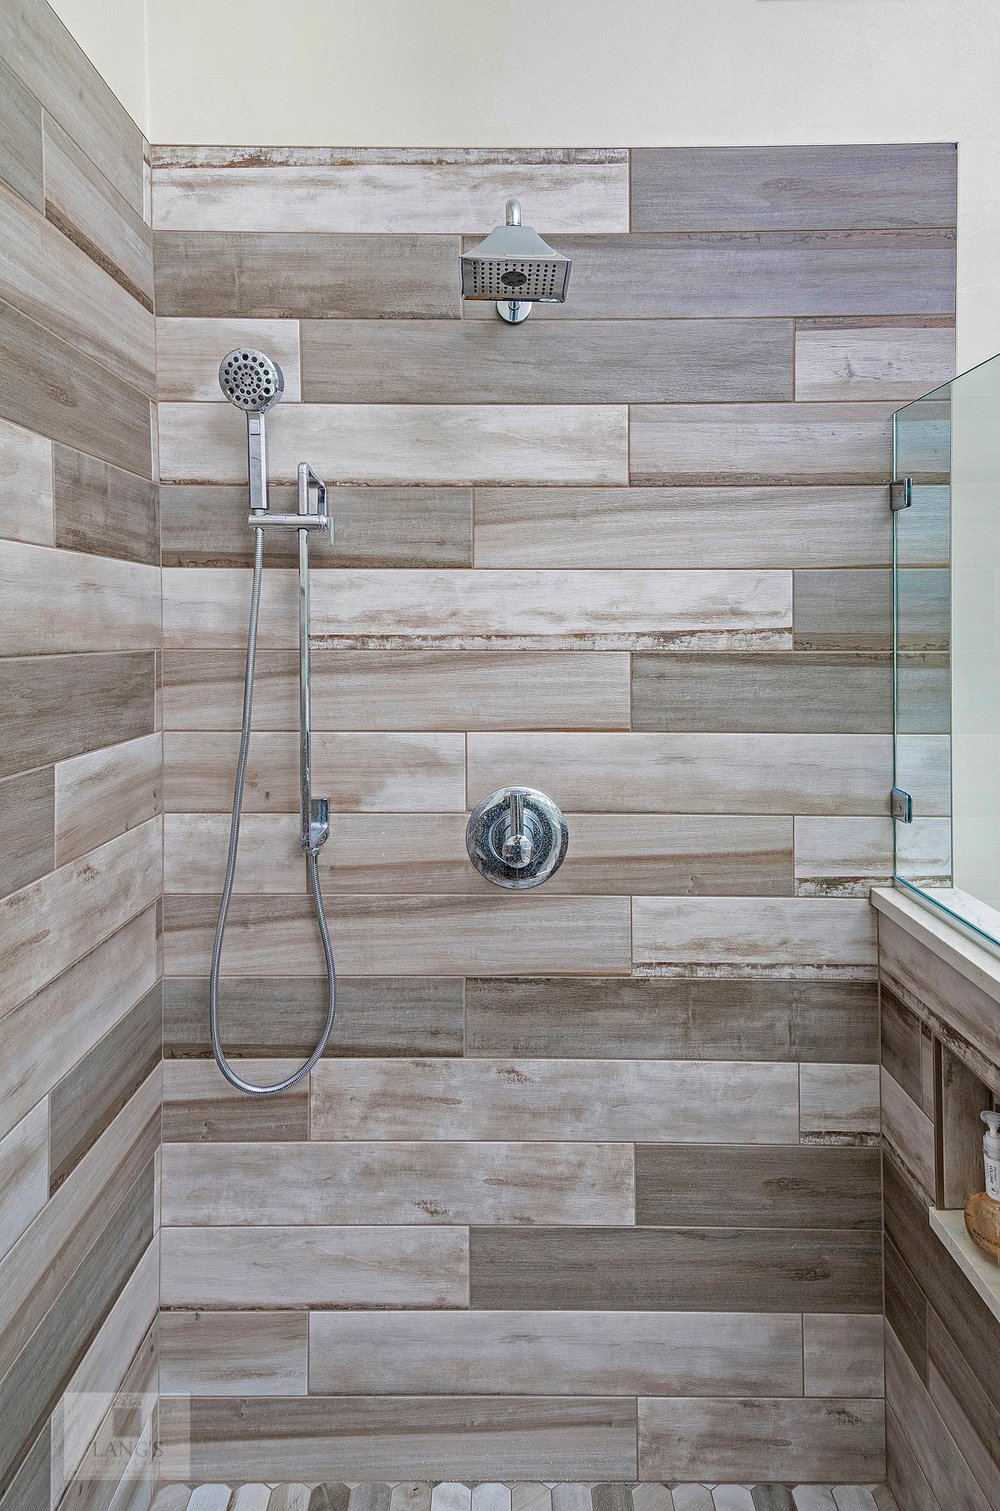 bath design with multiple showerheads